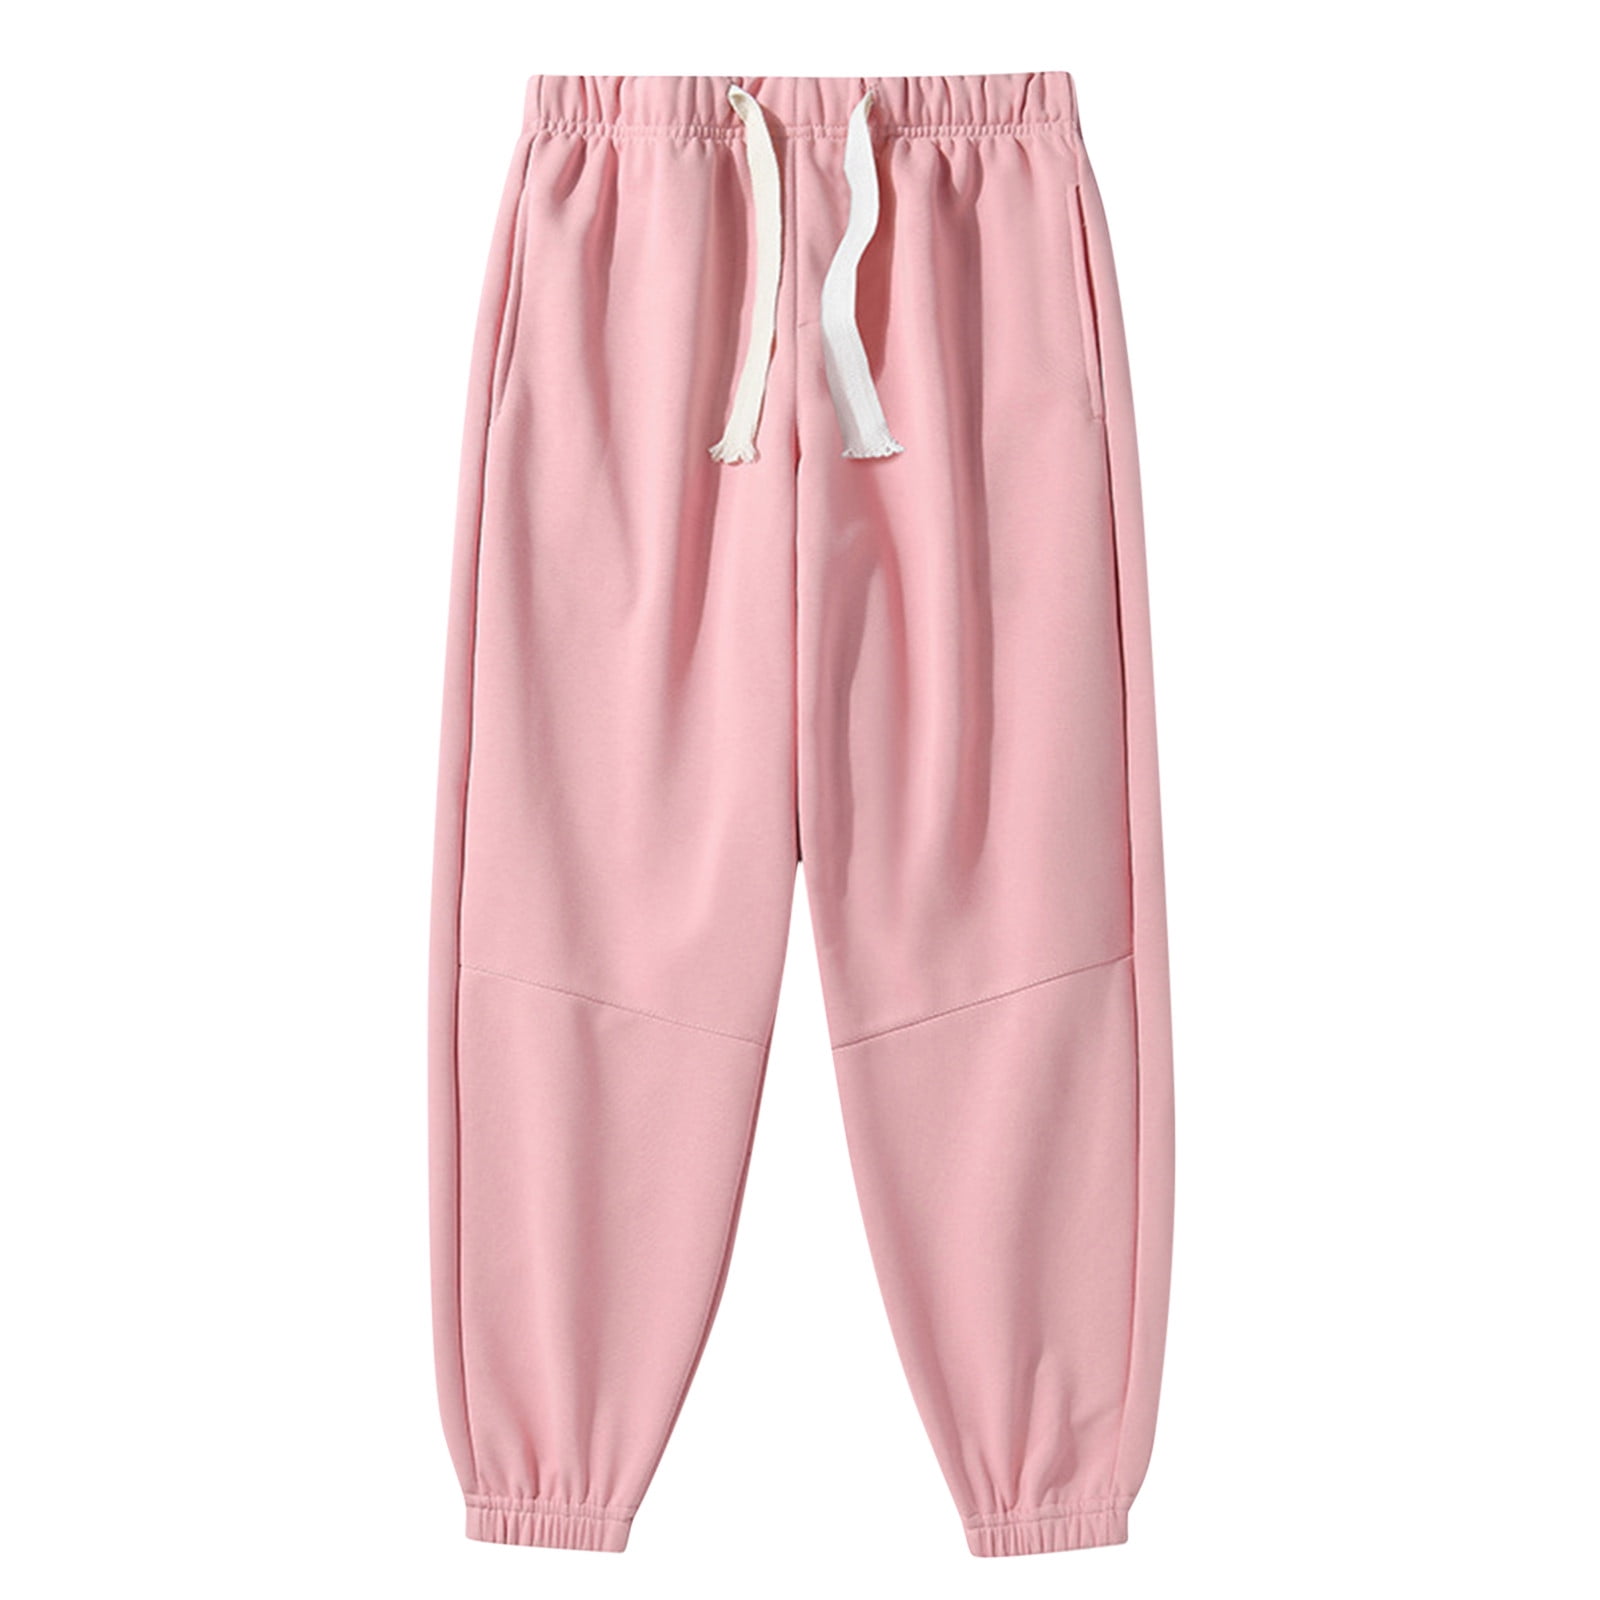 Hfyihgf Men's Fleece Sweatpants Sherpa Lined Jogger Sweatpants Winter Warm  Cotton Cargo Long Pants Drawstring Lounge Athletic Trousers(Pink,XL) 